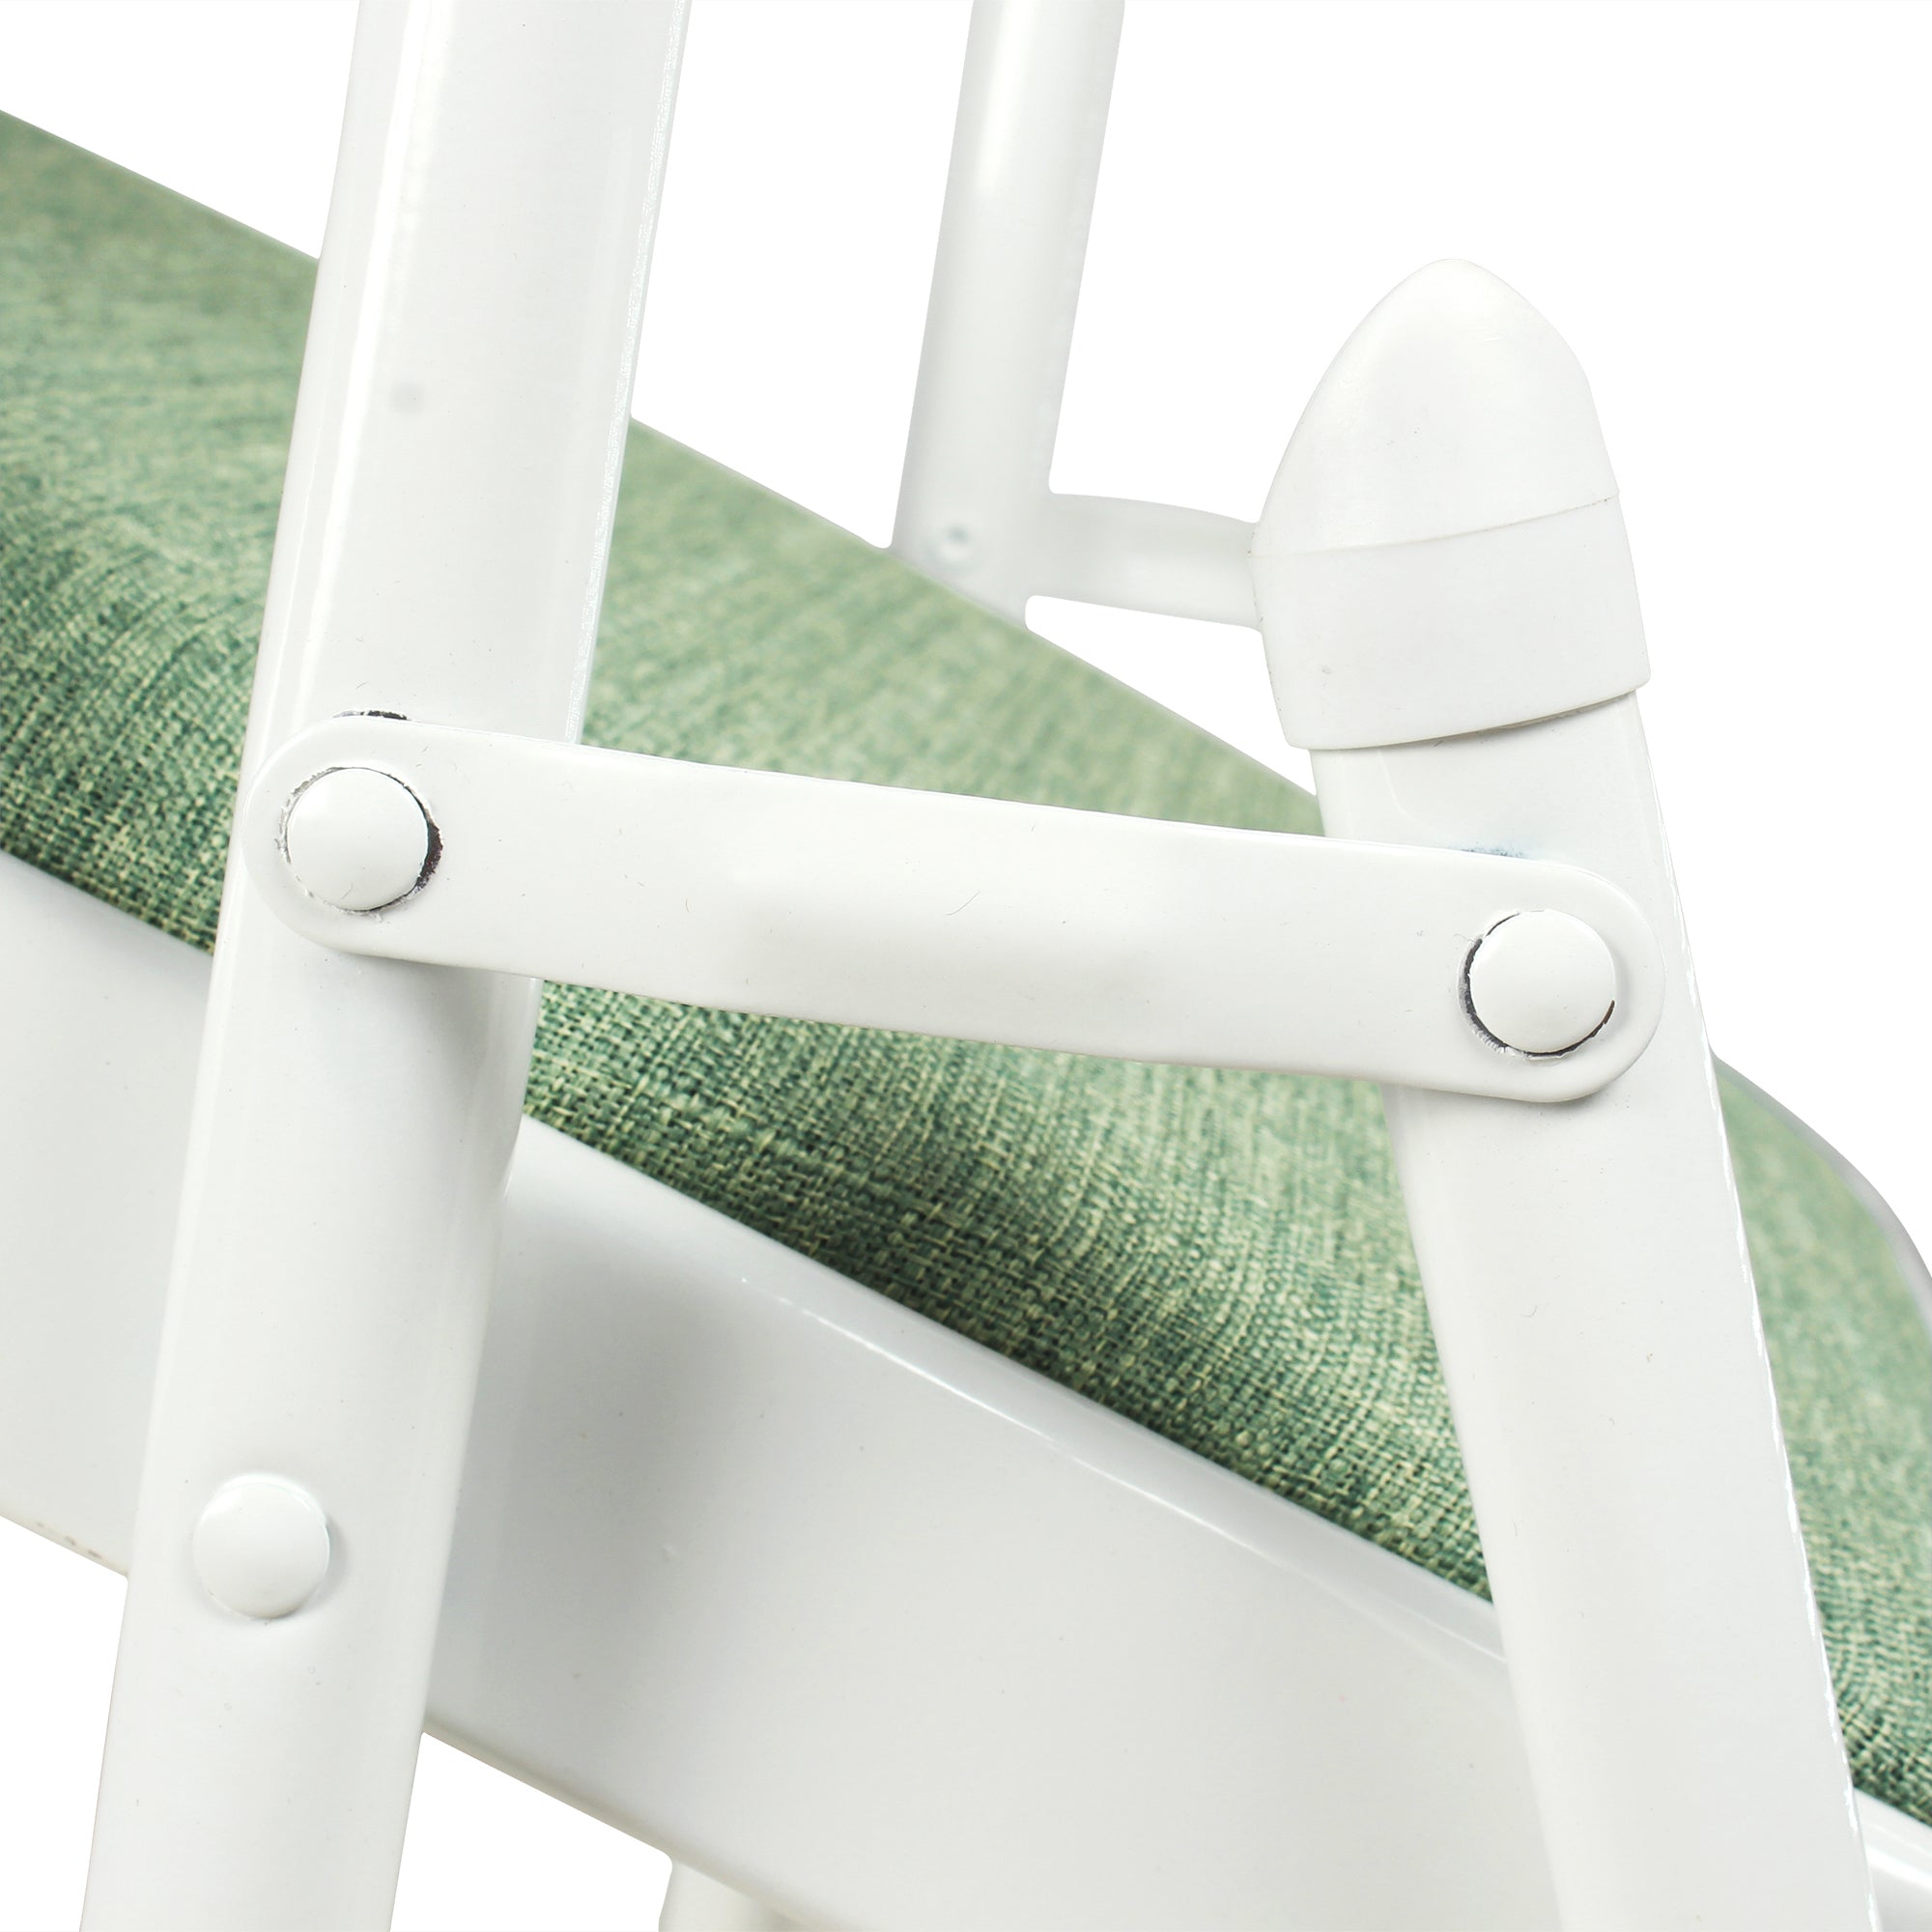 Folding Padded Green Metal Chair